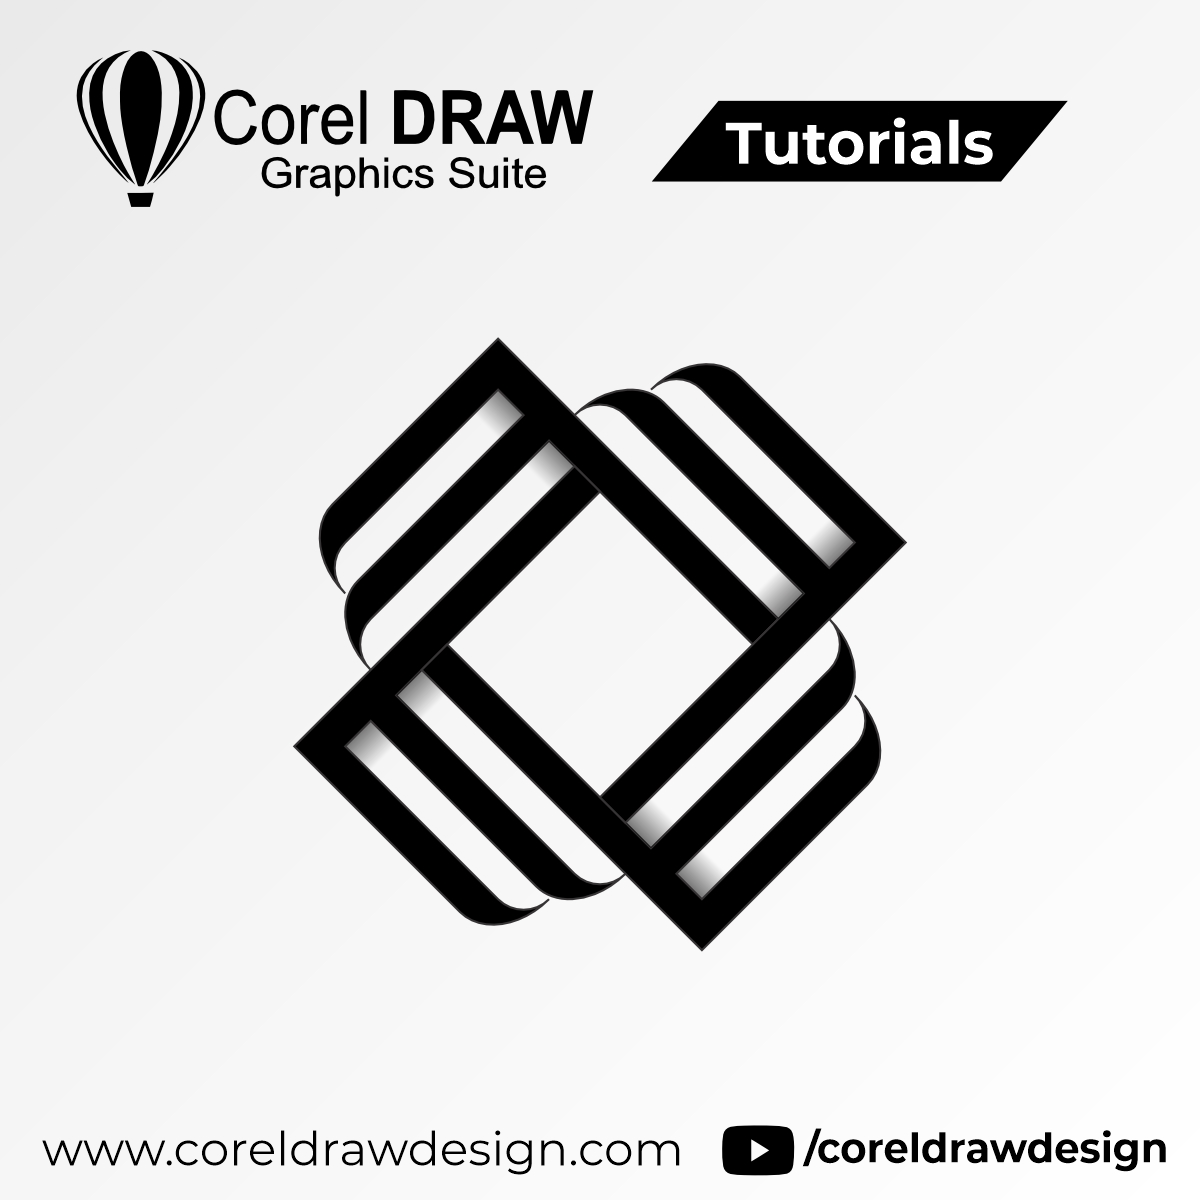 Abstract Modern Logo Design Tutorial | Coreldrawdesign Tutorials |Corel Draw | Coreldraw Logo |